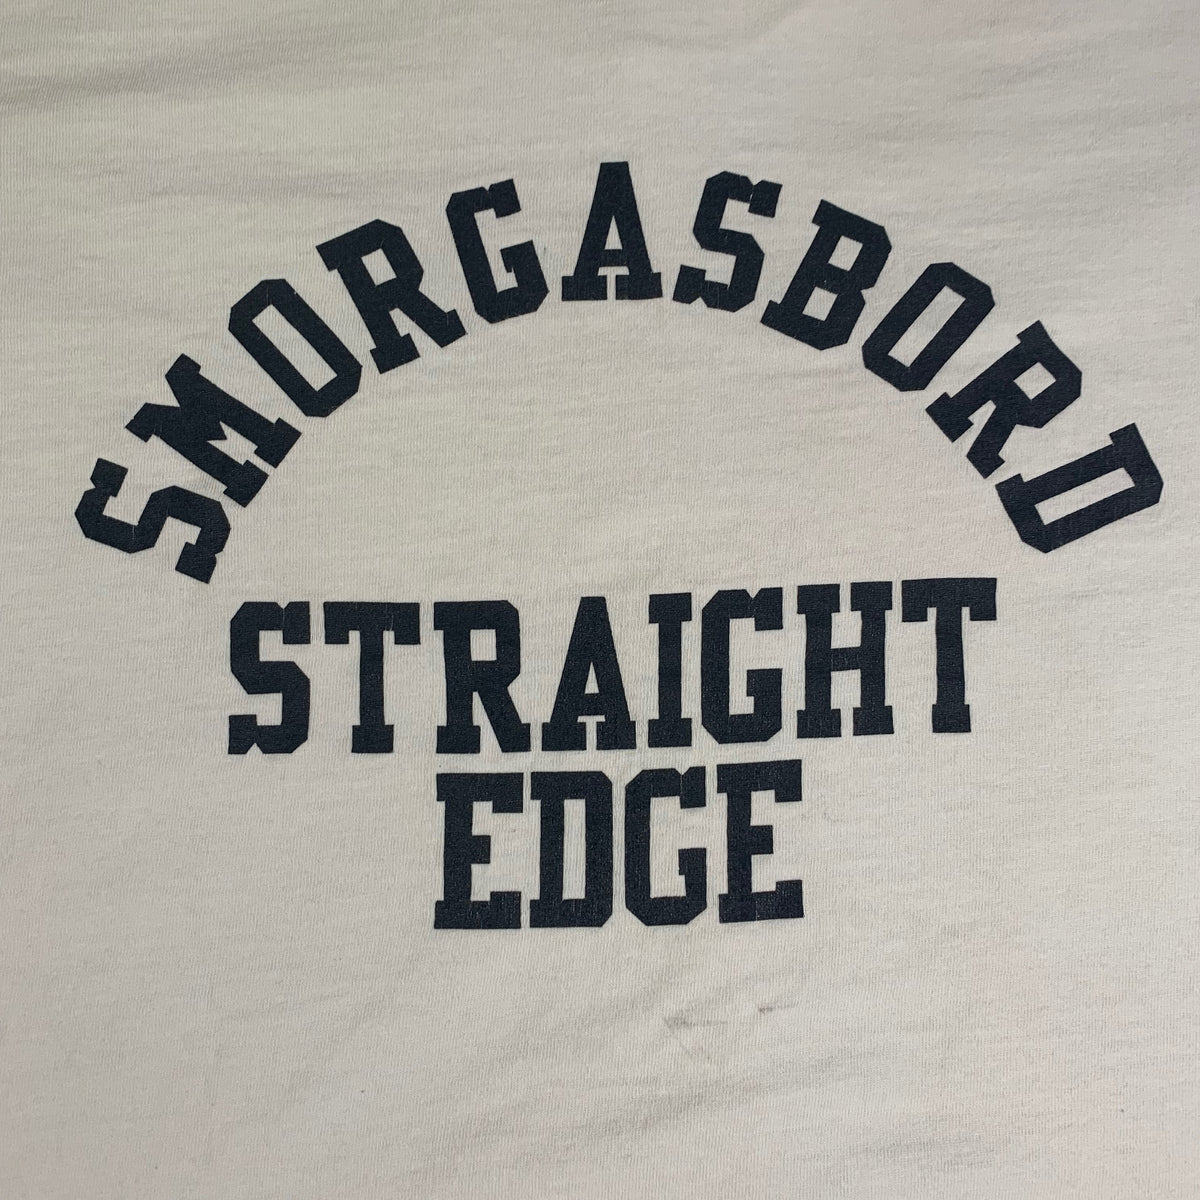 Vintage Follow Through &quot;Smorgasbord Straight Edge&quot; T-Shirt - jointcustodydc